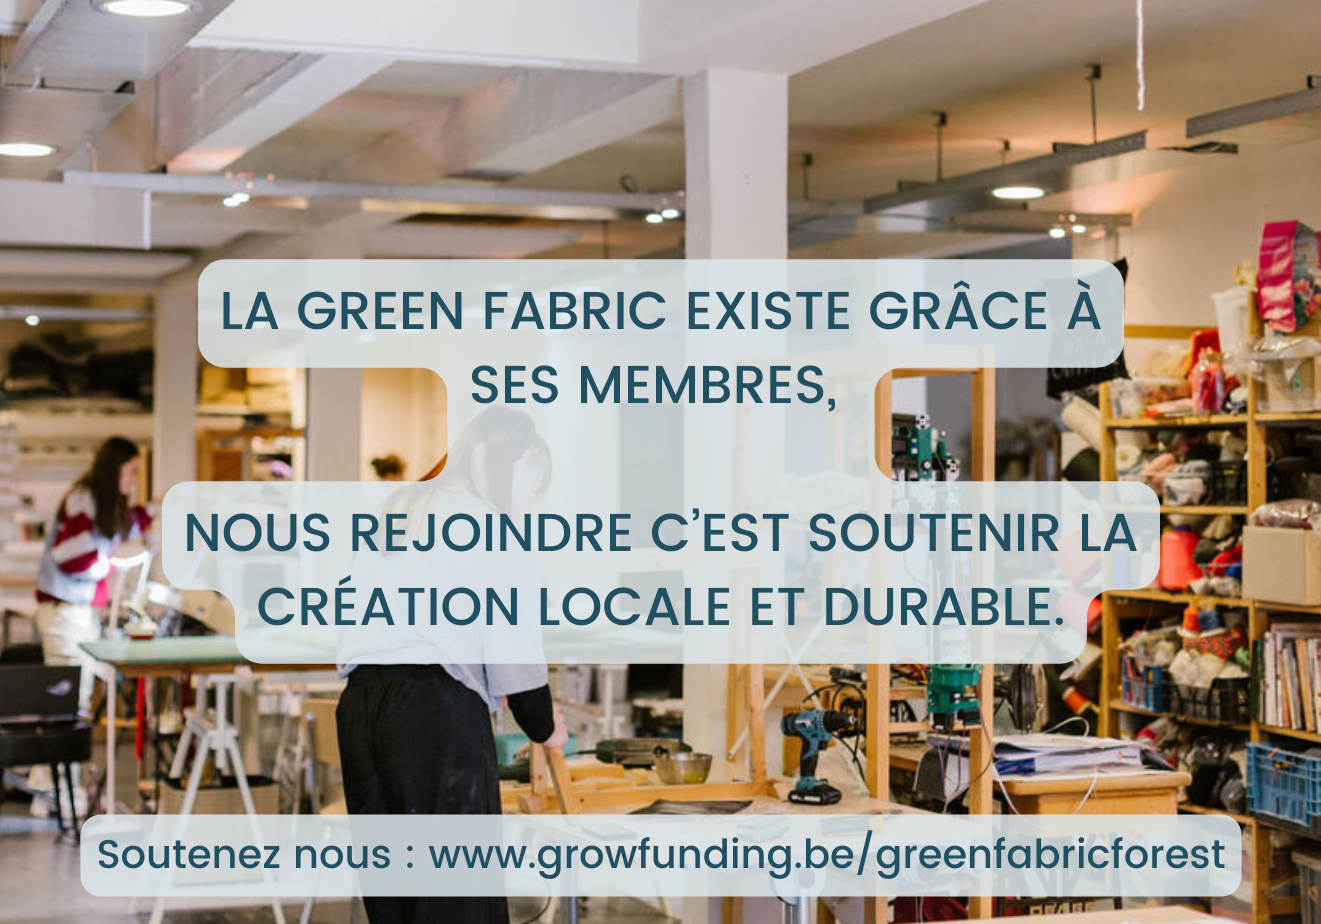 La Green Fabric à besoin de vous ! www.growfunding.begreenfabric